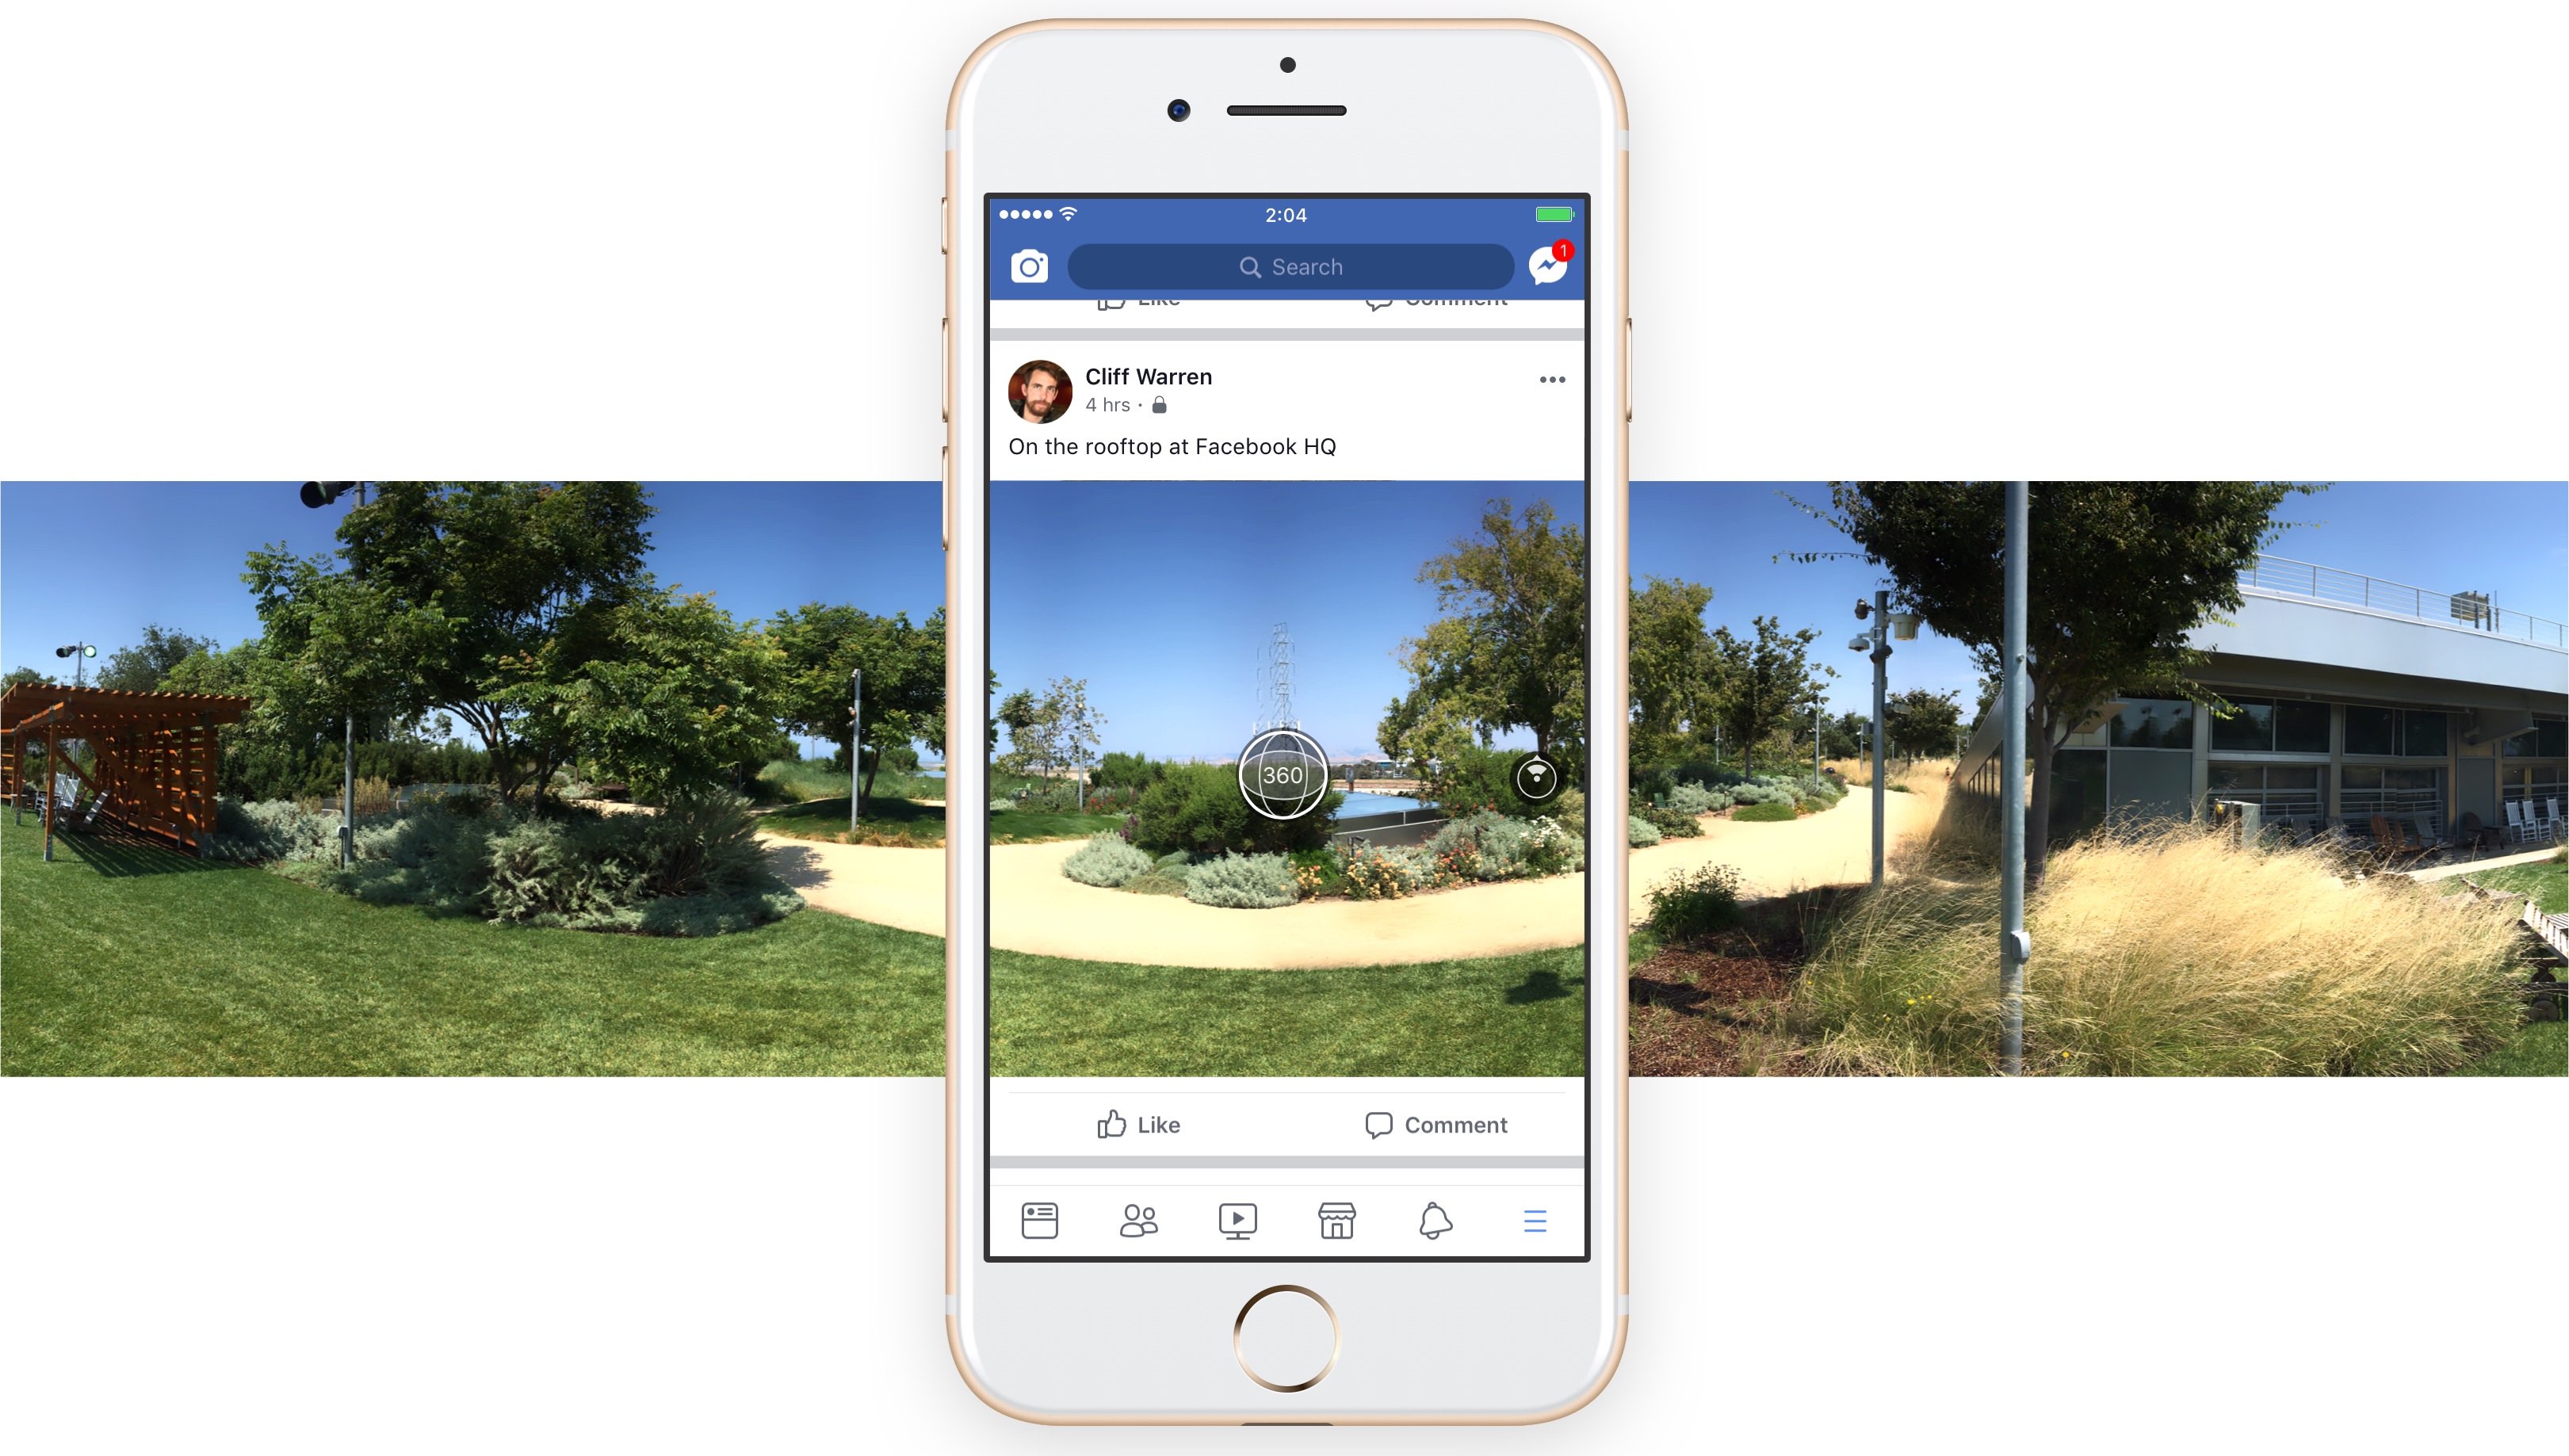 You can now take 360-degree photos in Facebook’s iOS app